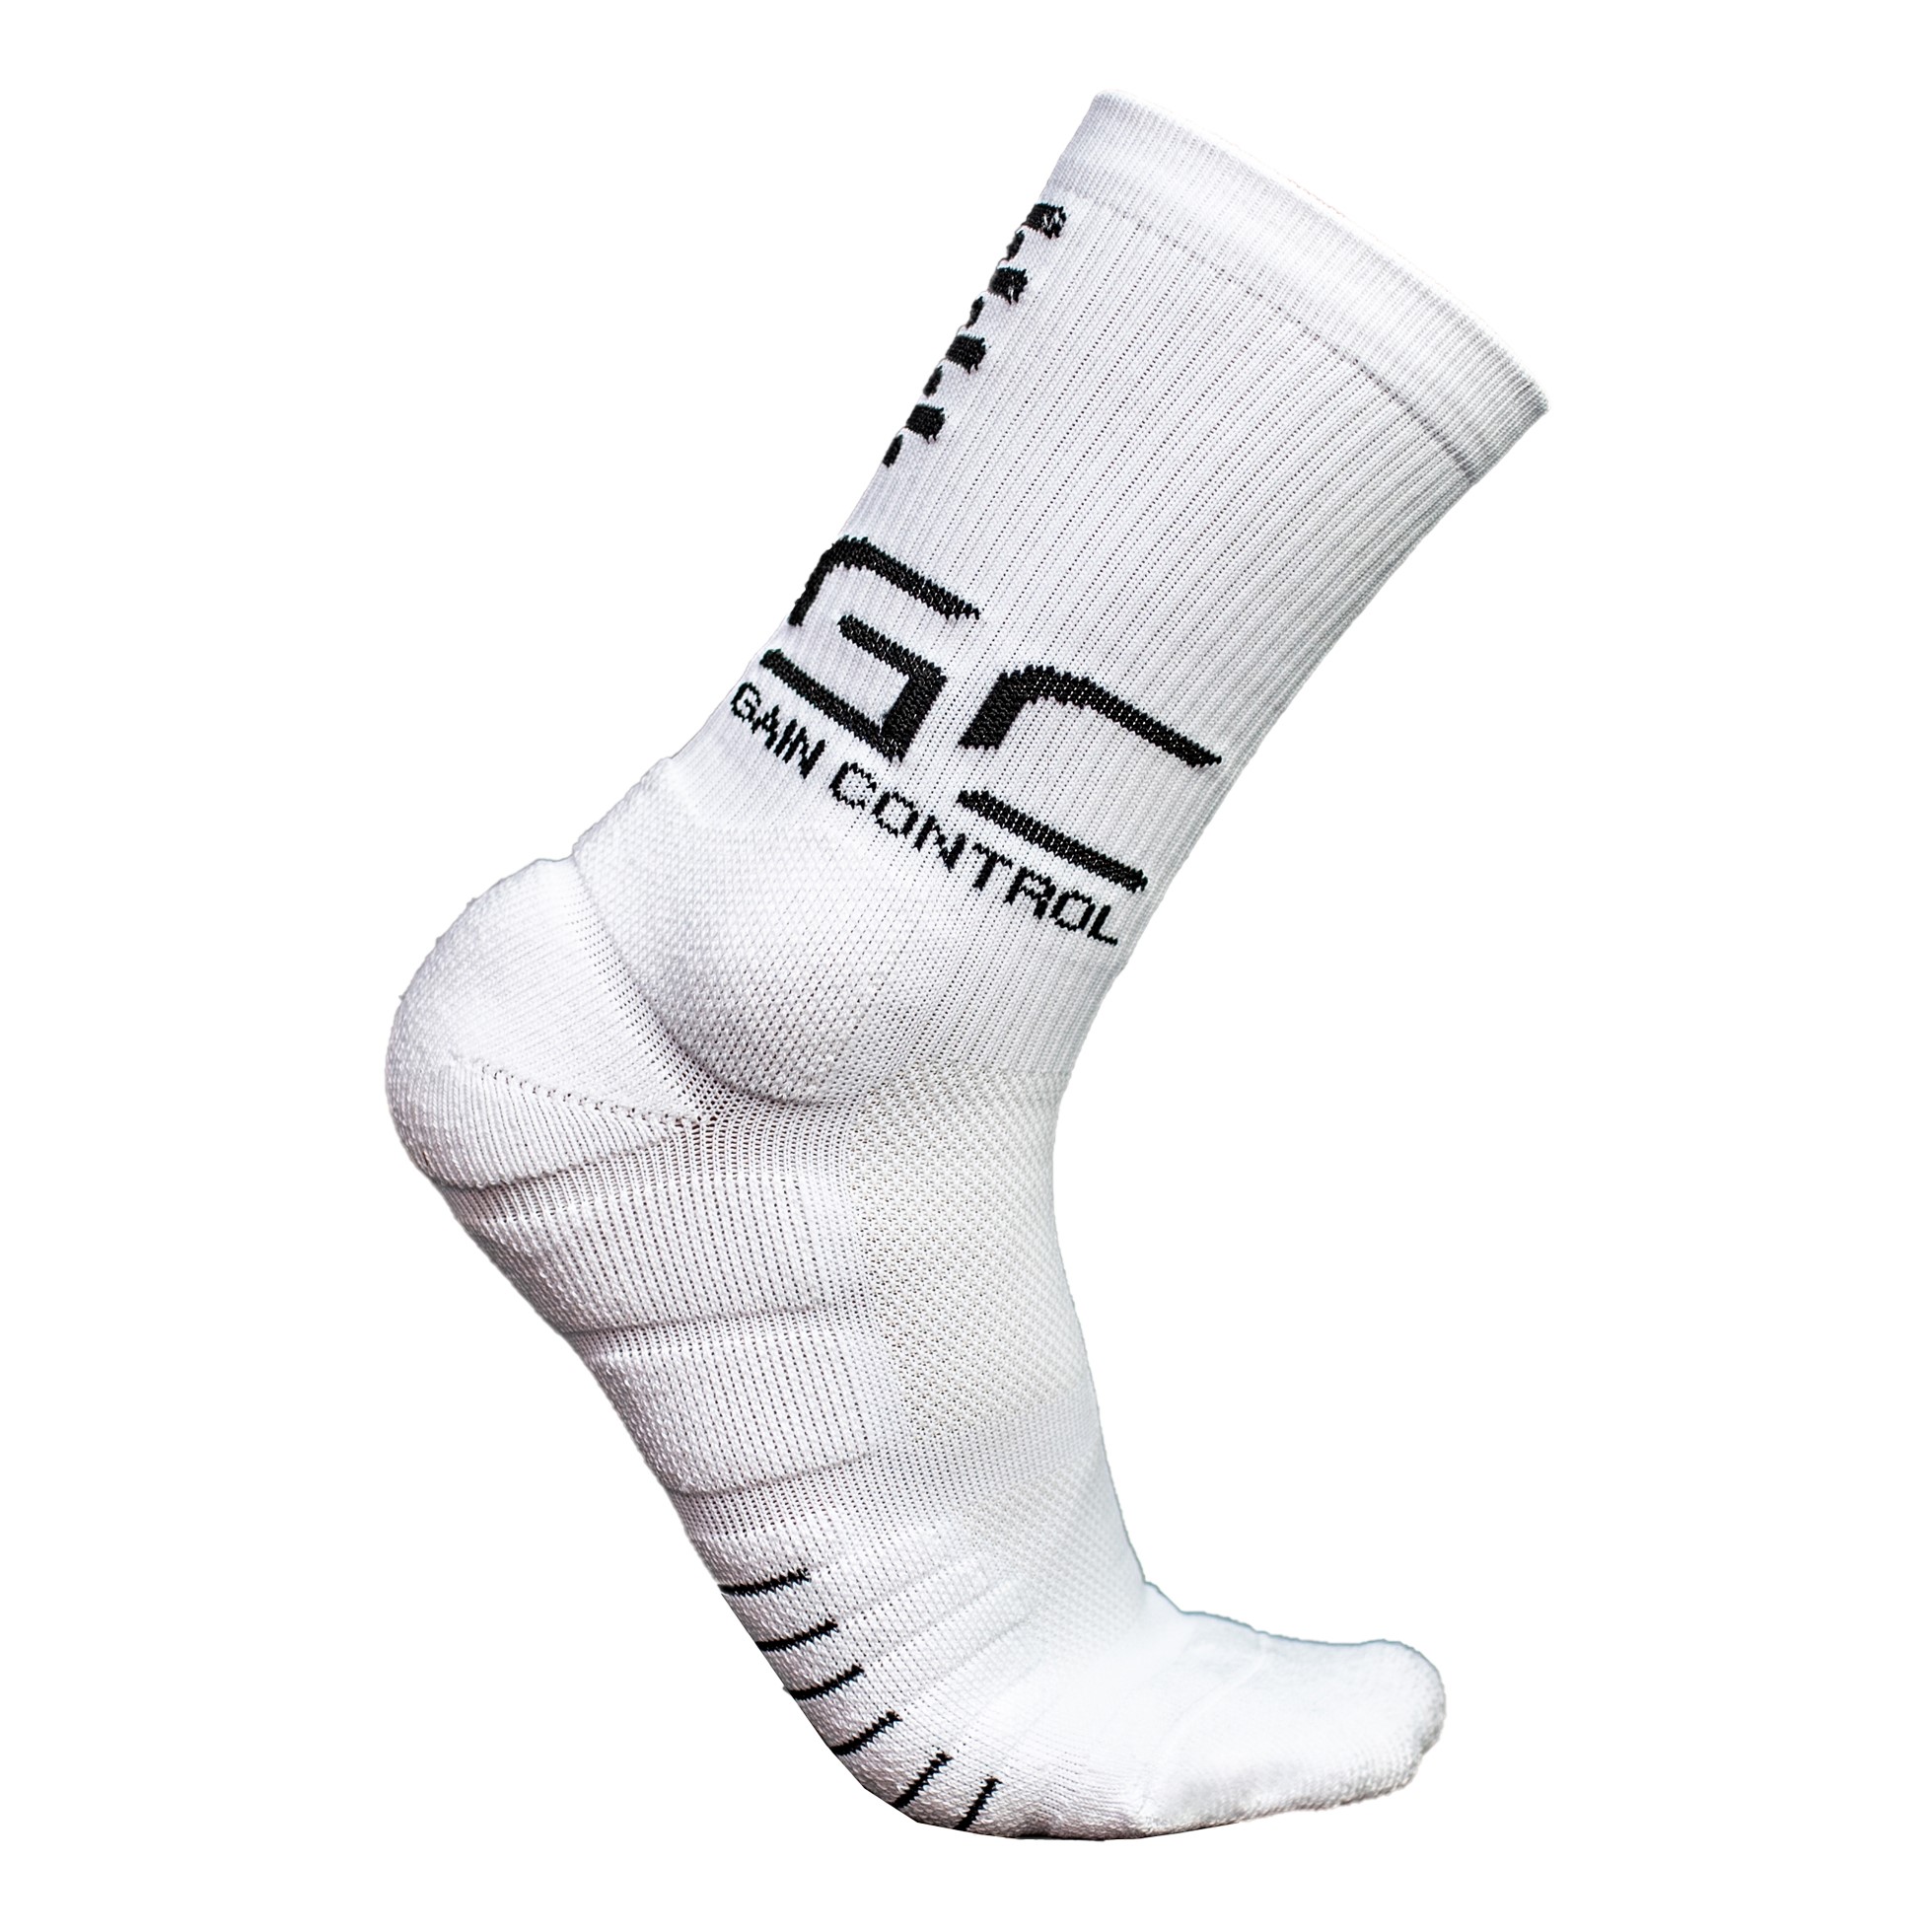 Sport socks Gain Control